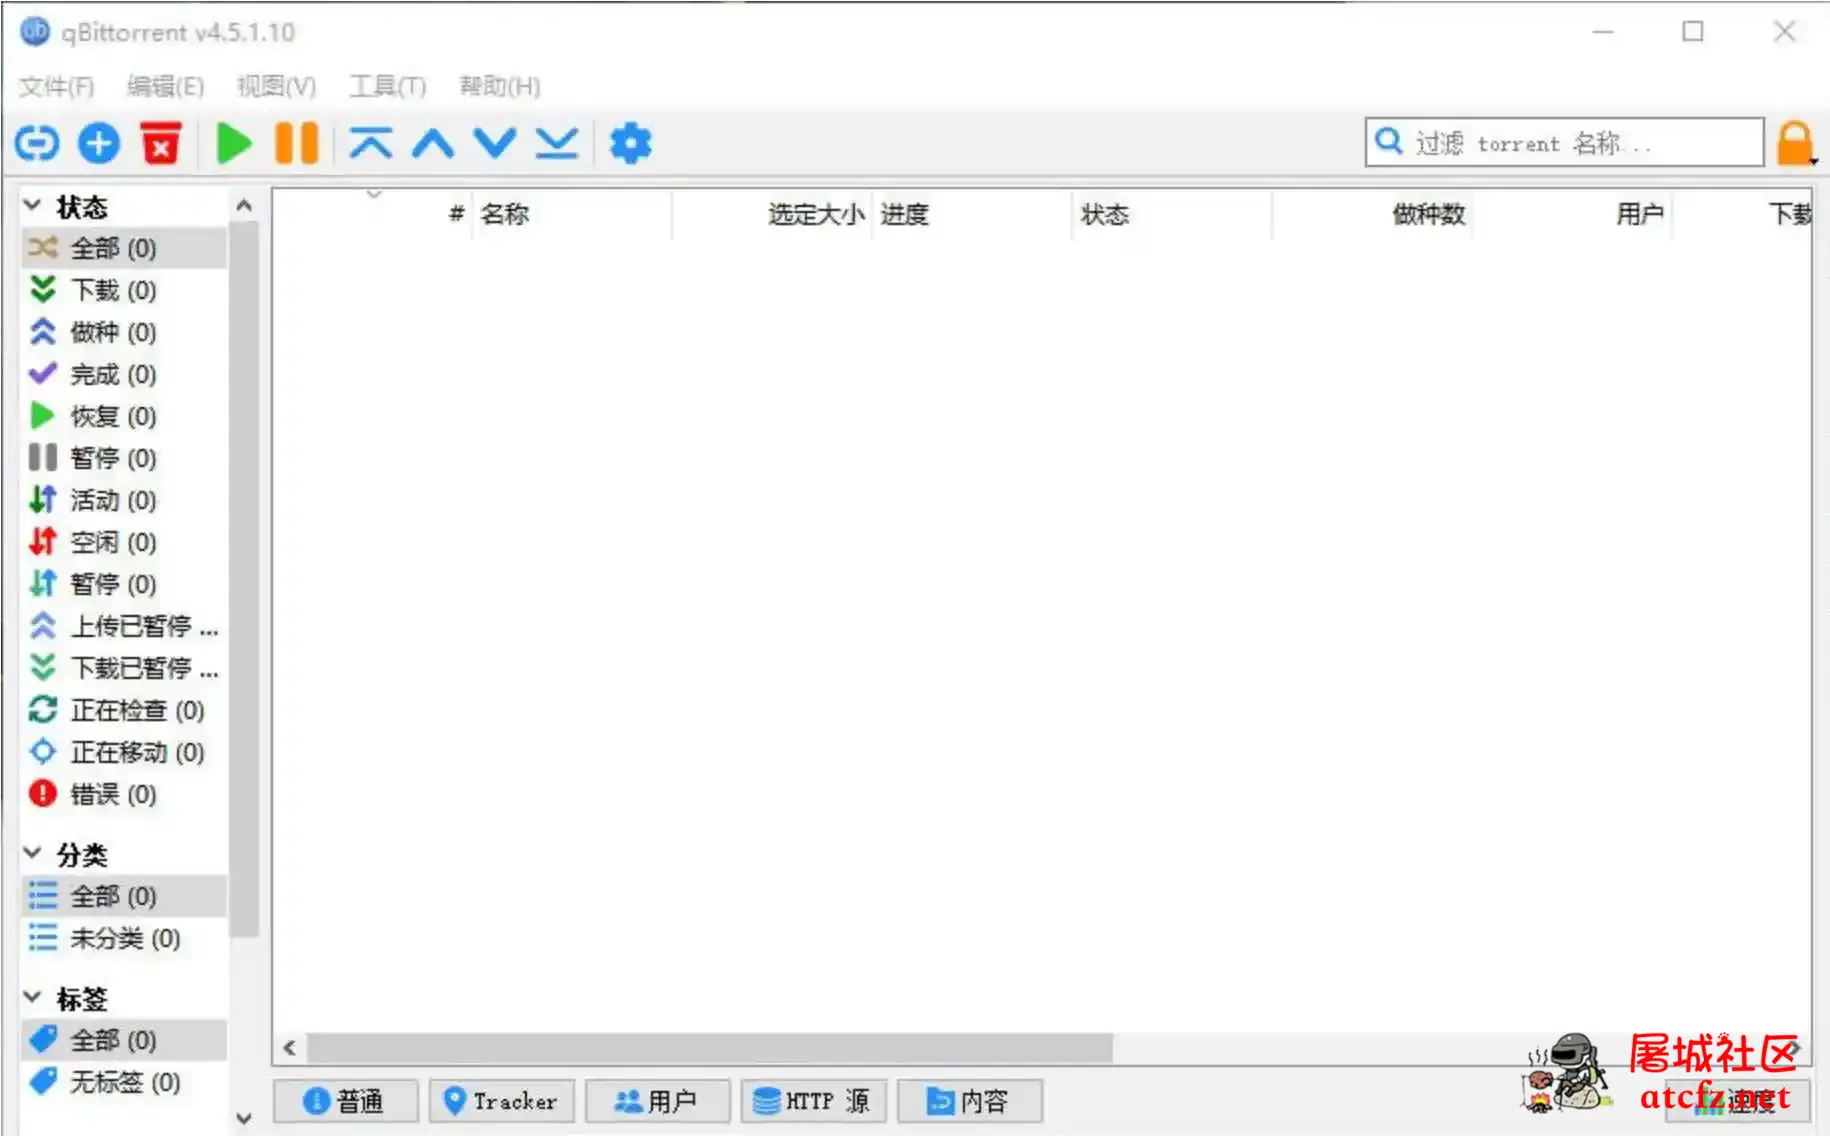 qBittorrent v4.5.3.10增强便携版BT种子下载工具 屠城辅助网www.tcfz1.com1706